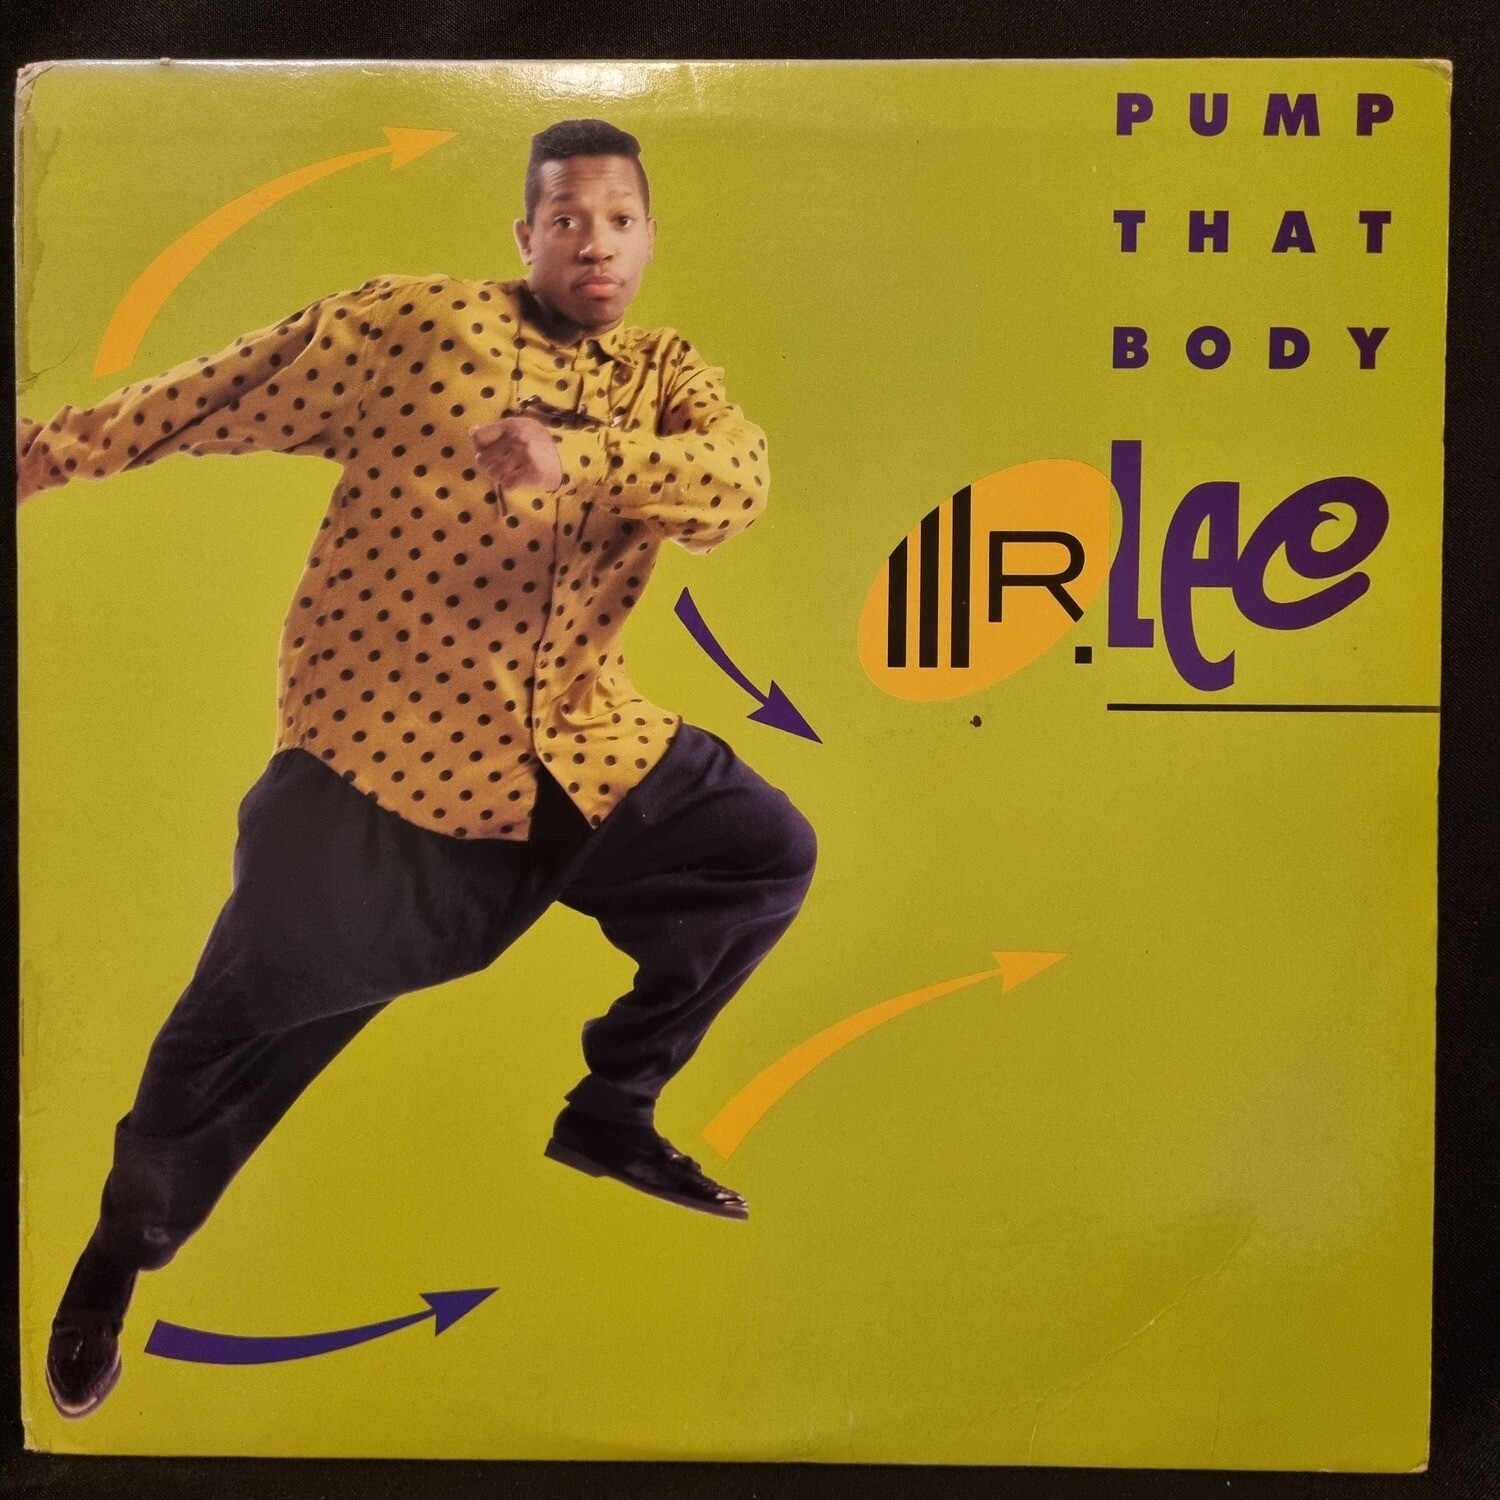 Mr. Lee- Pump That Body